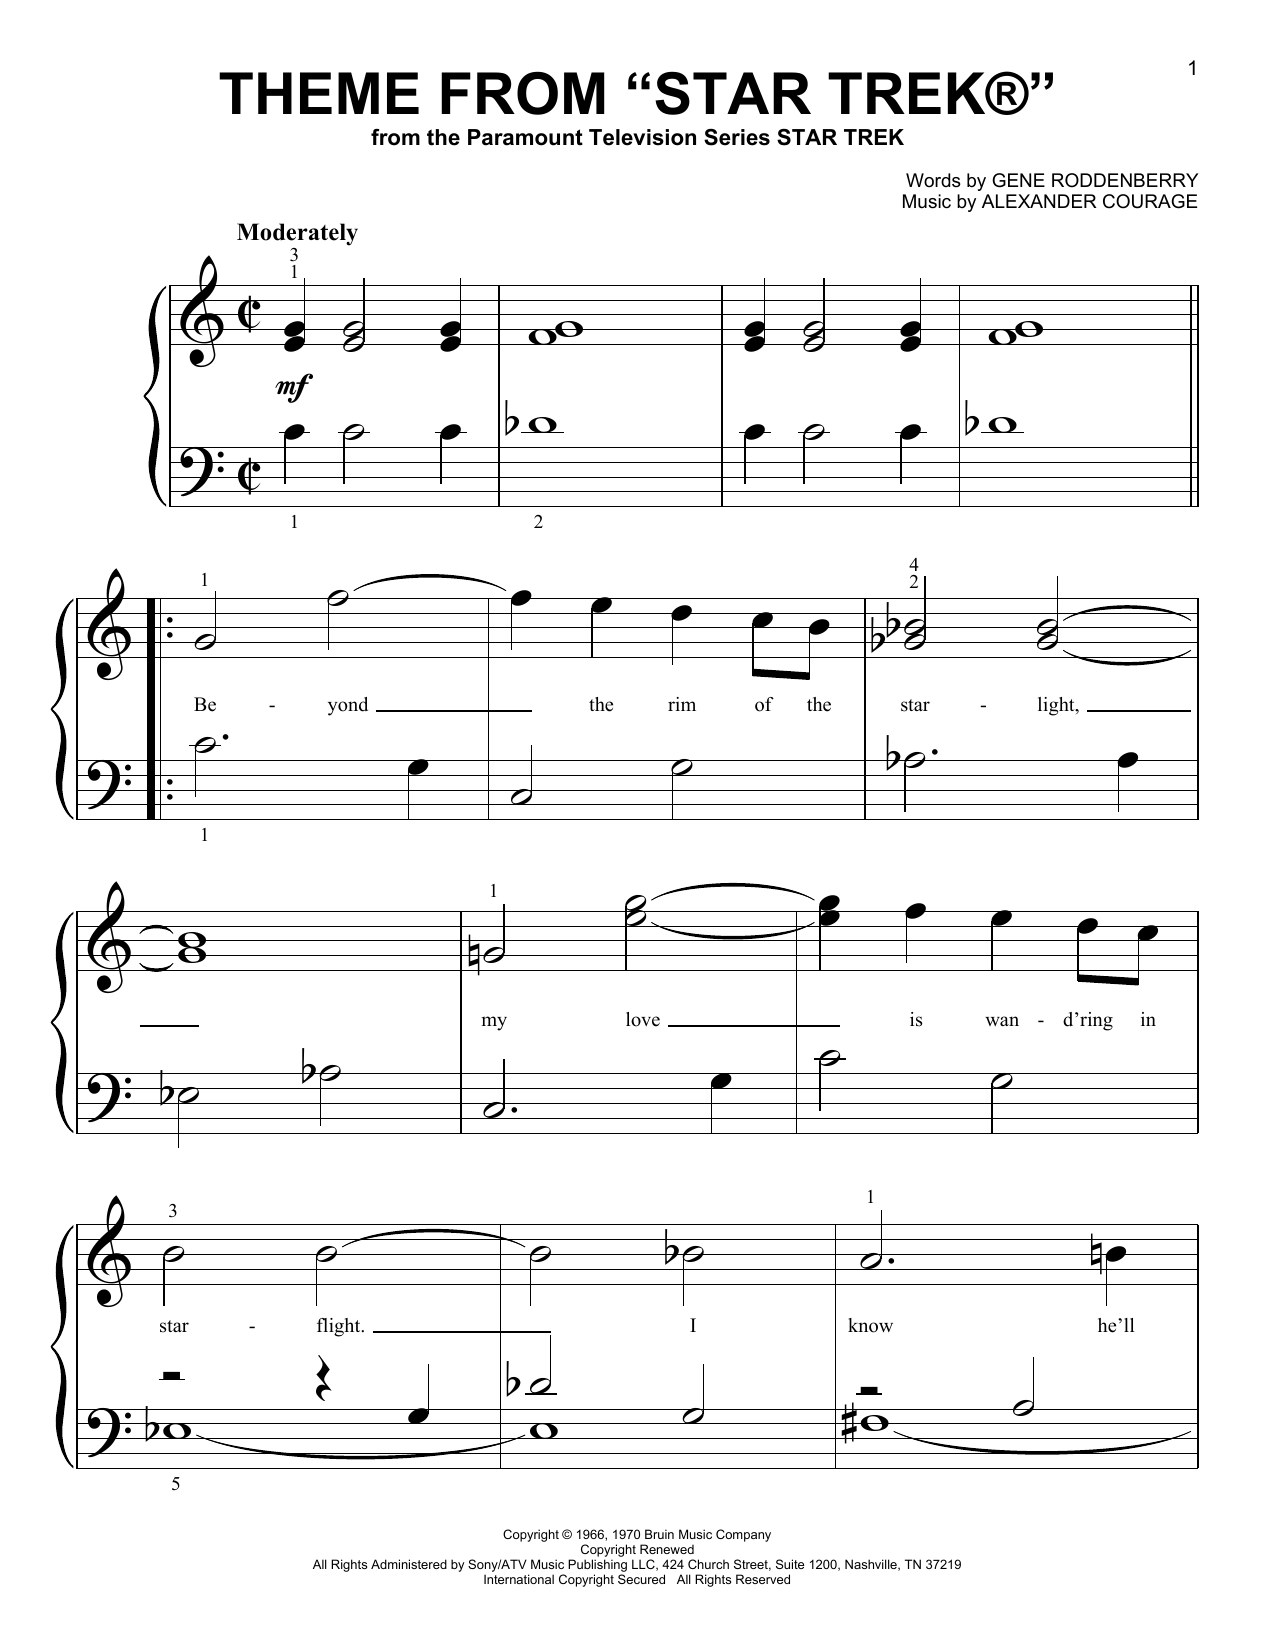 Gene Roddenberry Theme from Star Trek(R) Sheet Music Notes & Chords for Guitar Tab (Single Guitar) - Download or Print PDF